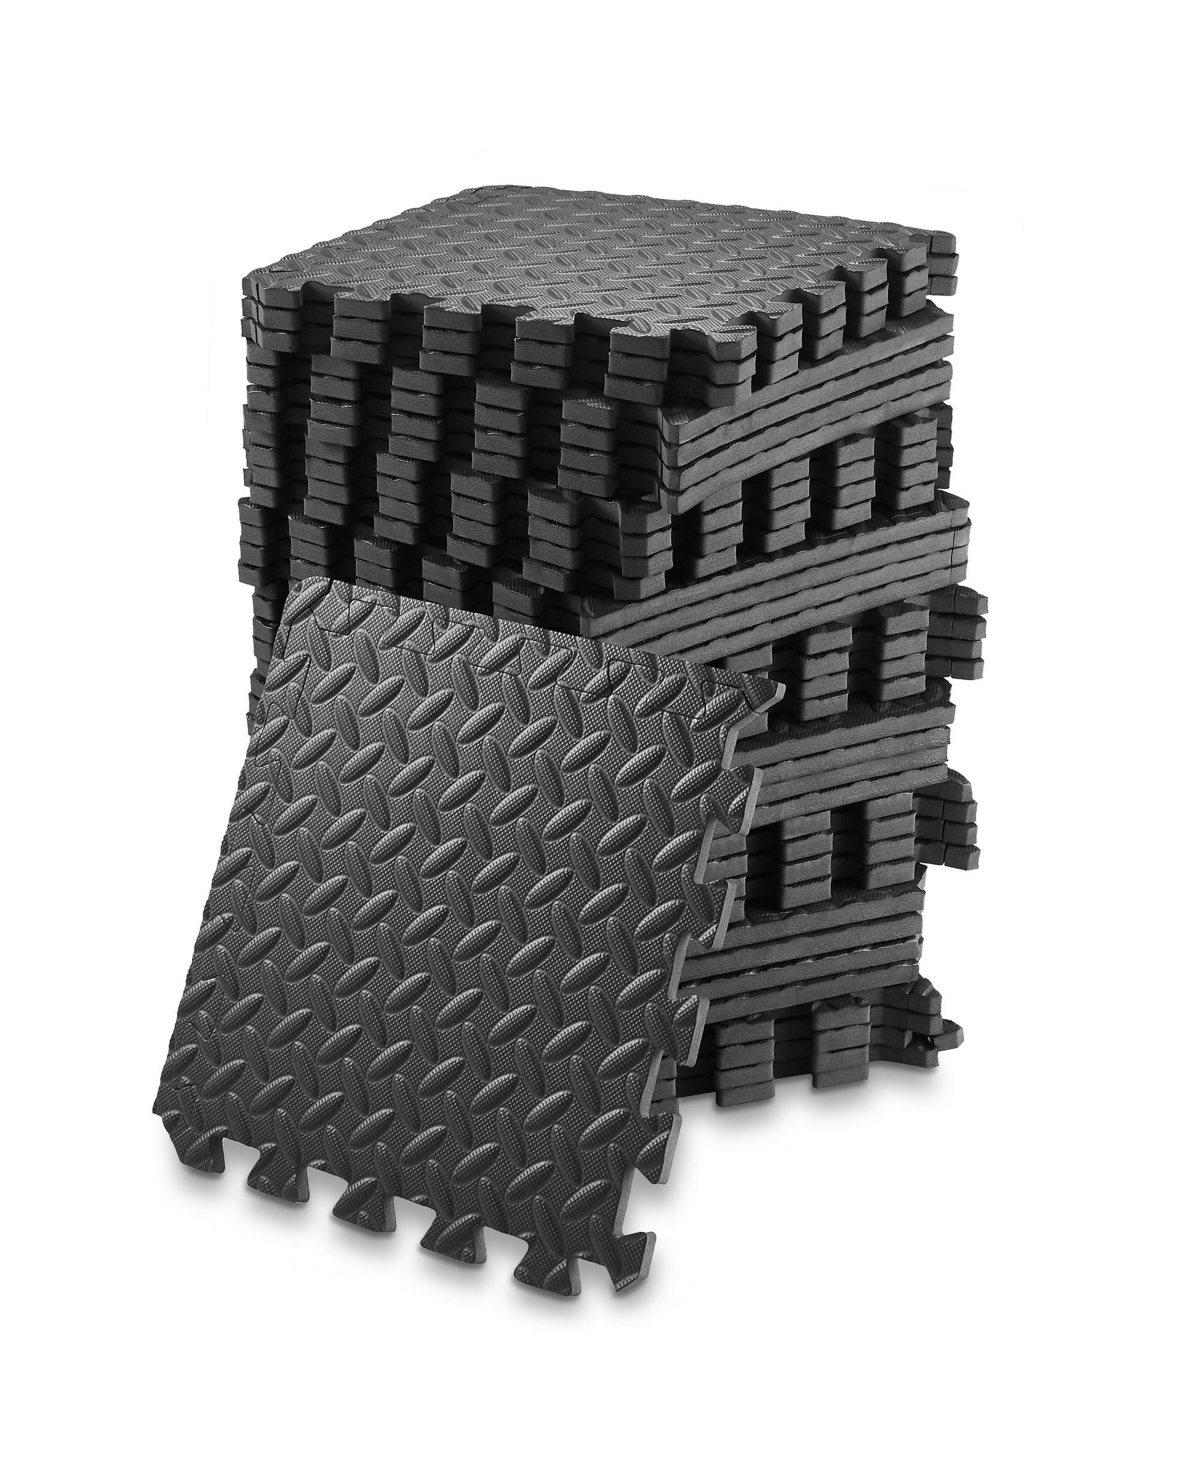 Pack of 36 Exercise Flooring Mats - 12 x 12 Inch Foam Rubber Interlocking Puzzle Floor Tiles - Black - Black